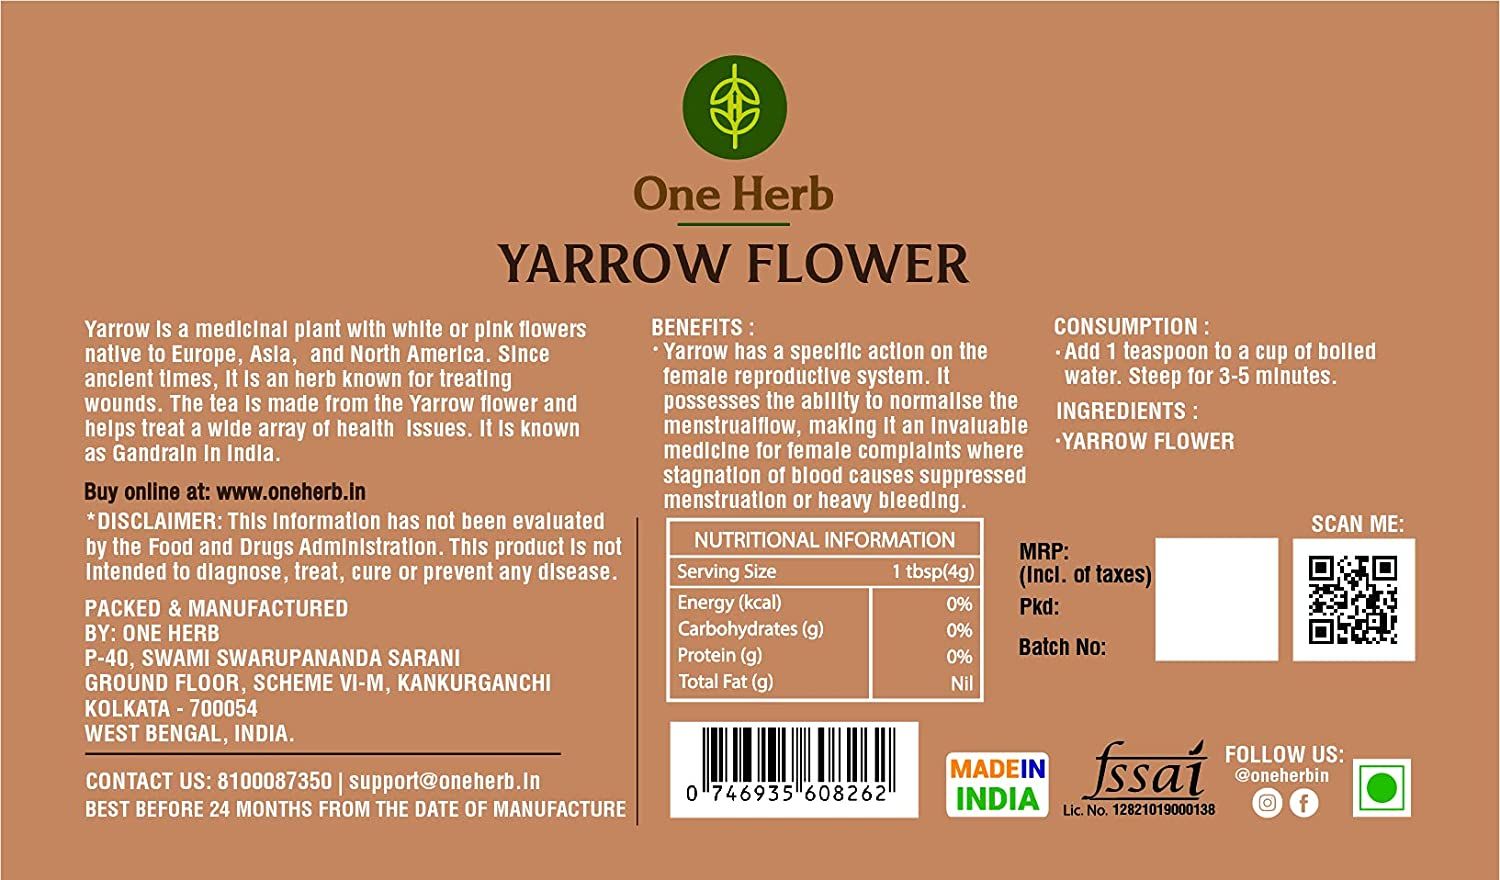 One Herb Yarrow Flower Tea Image